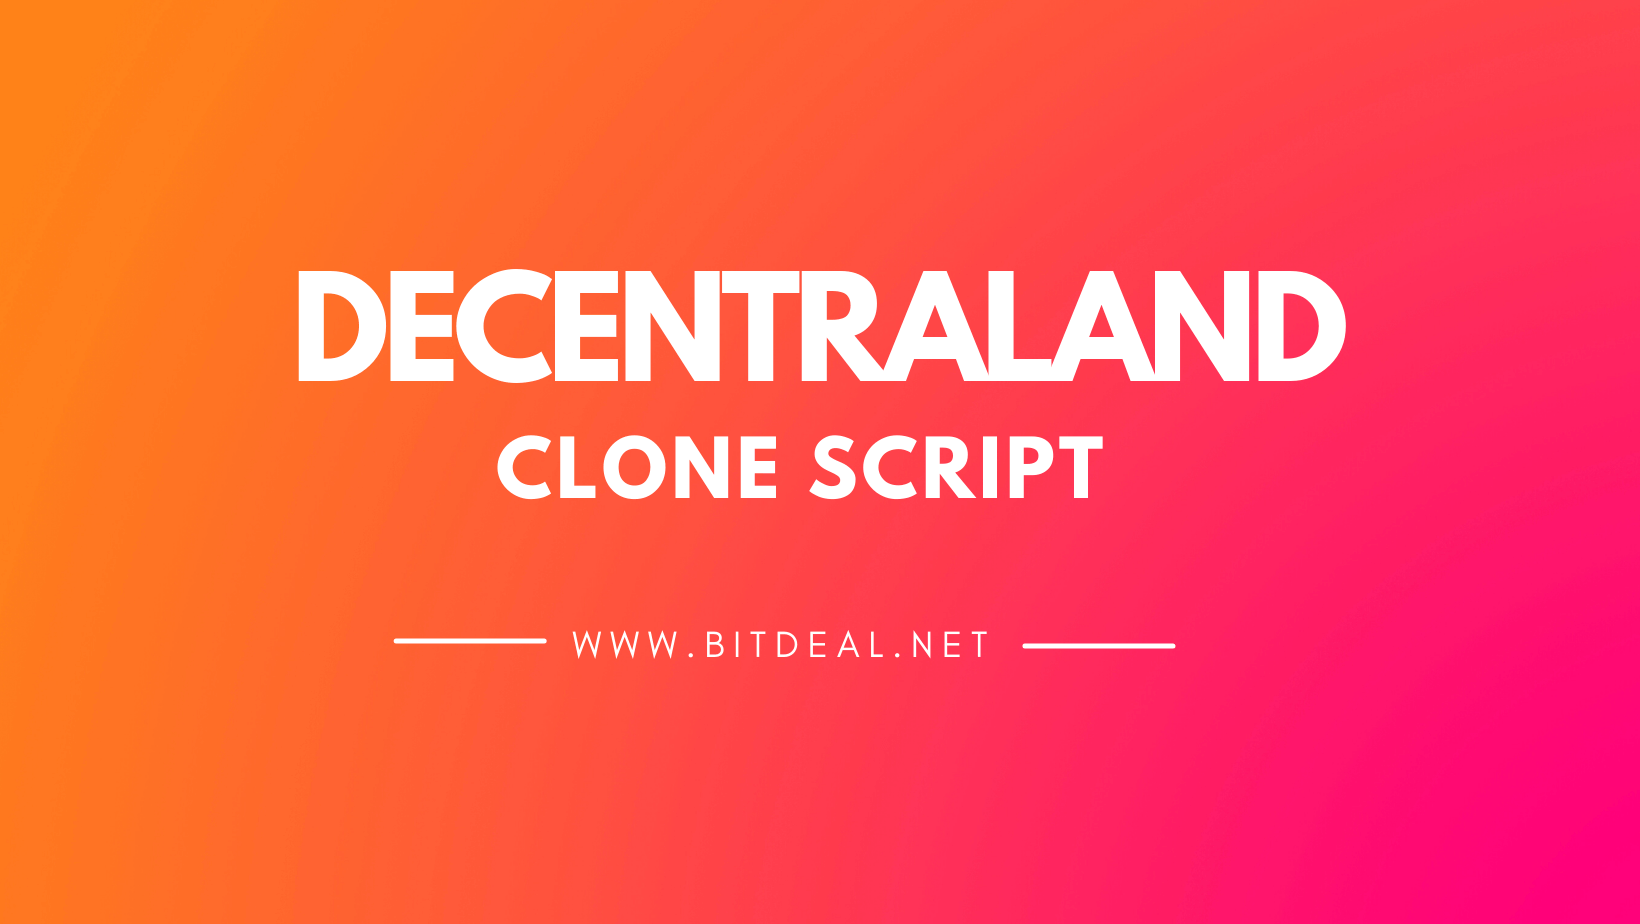 Decentraland Clone Script To Build an NFT Virtual Platform like Decentraland